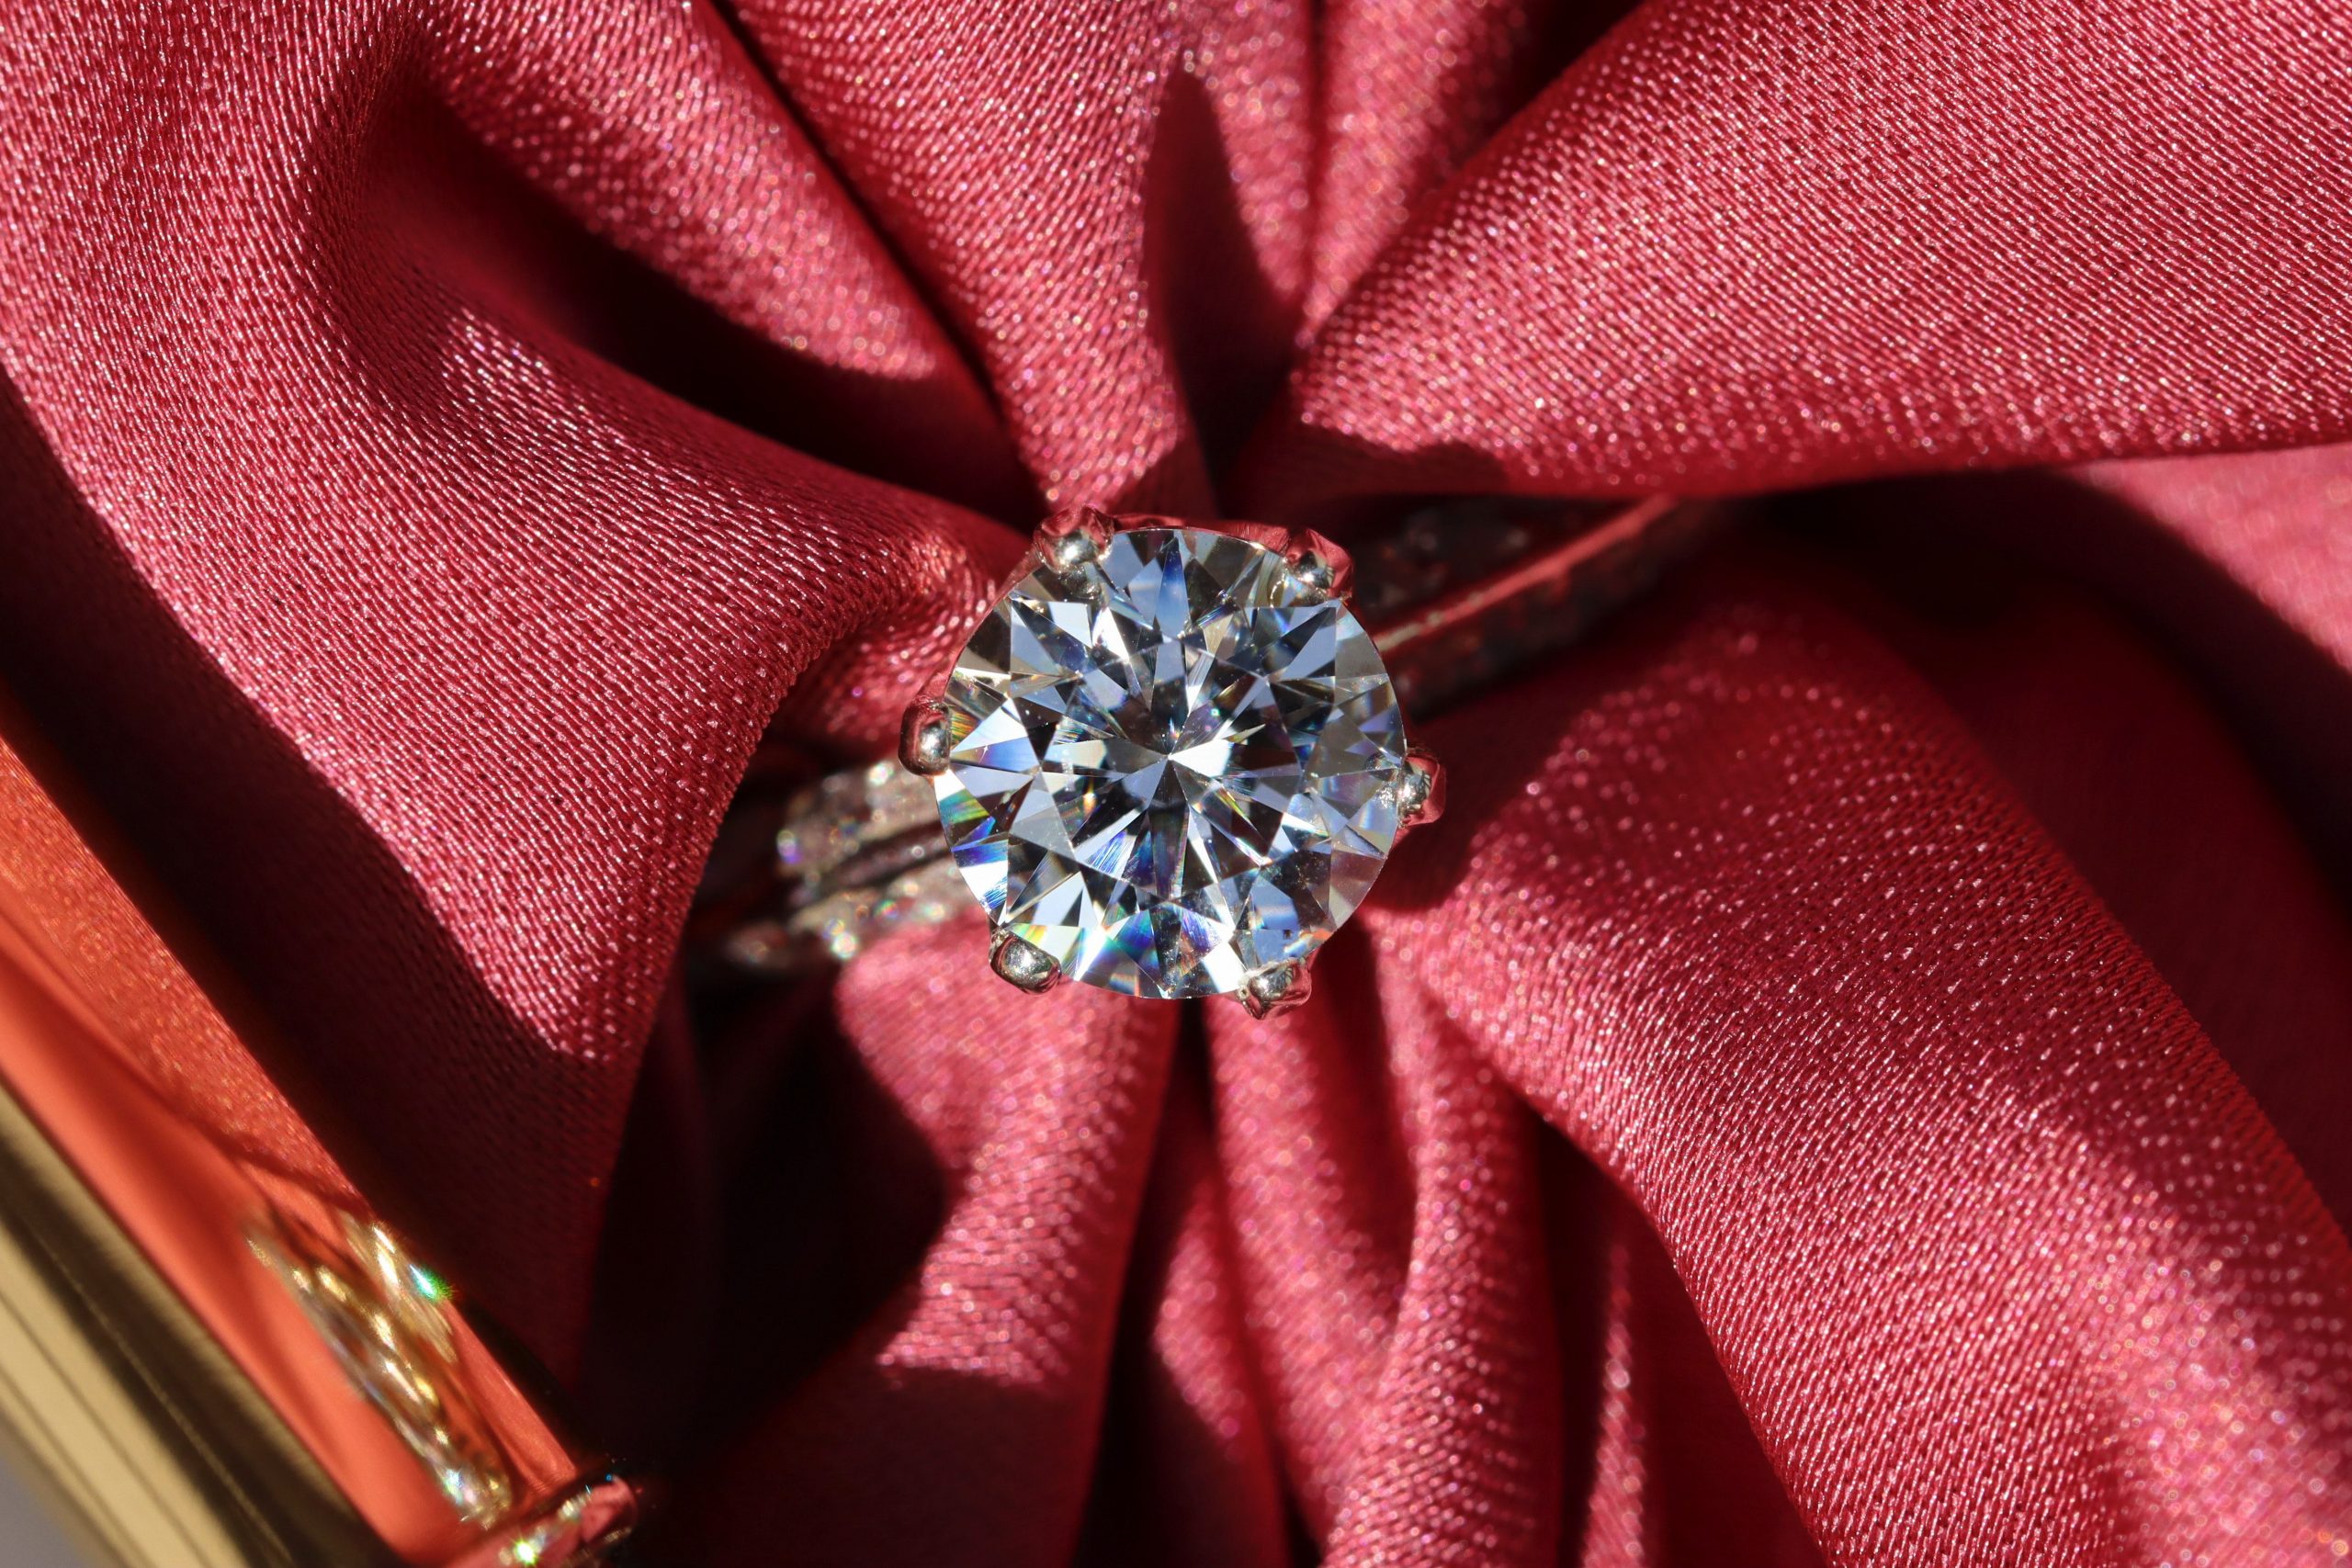 Madhya Pradesh farmer discovers 11.88-carat diamond worth 50 lakhs